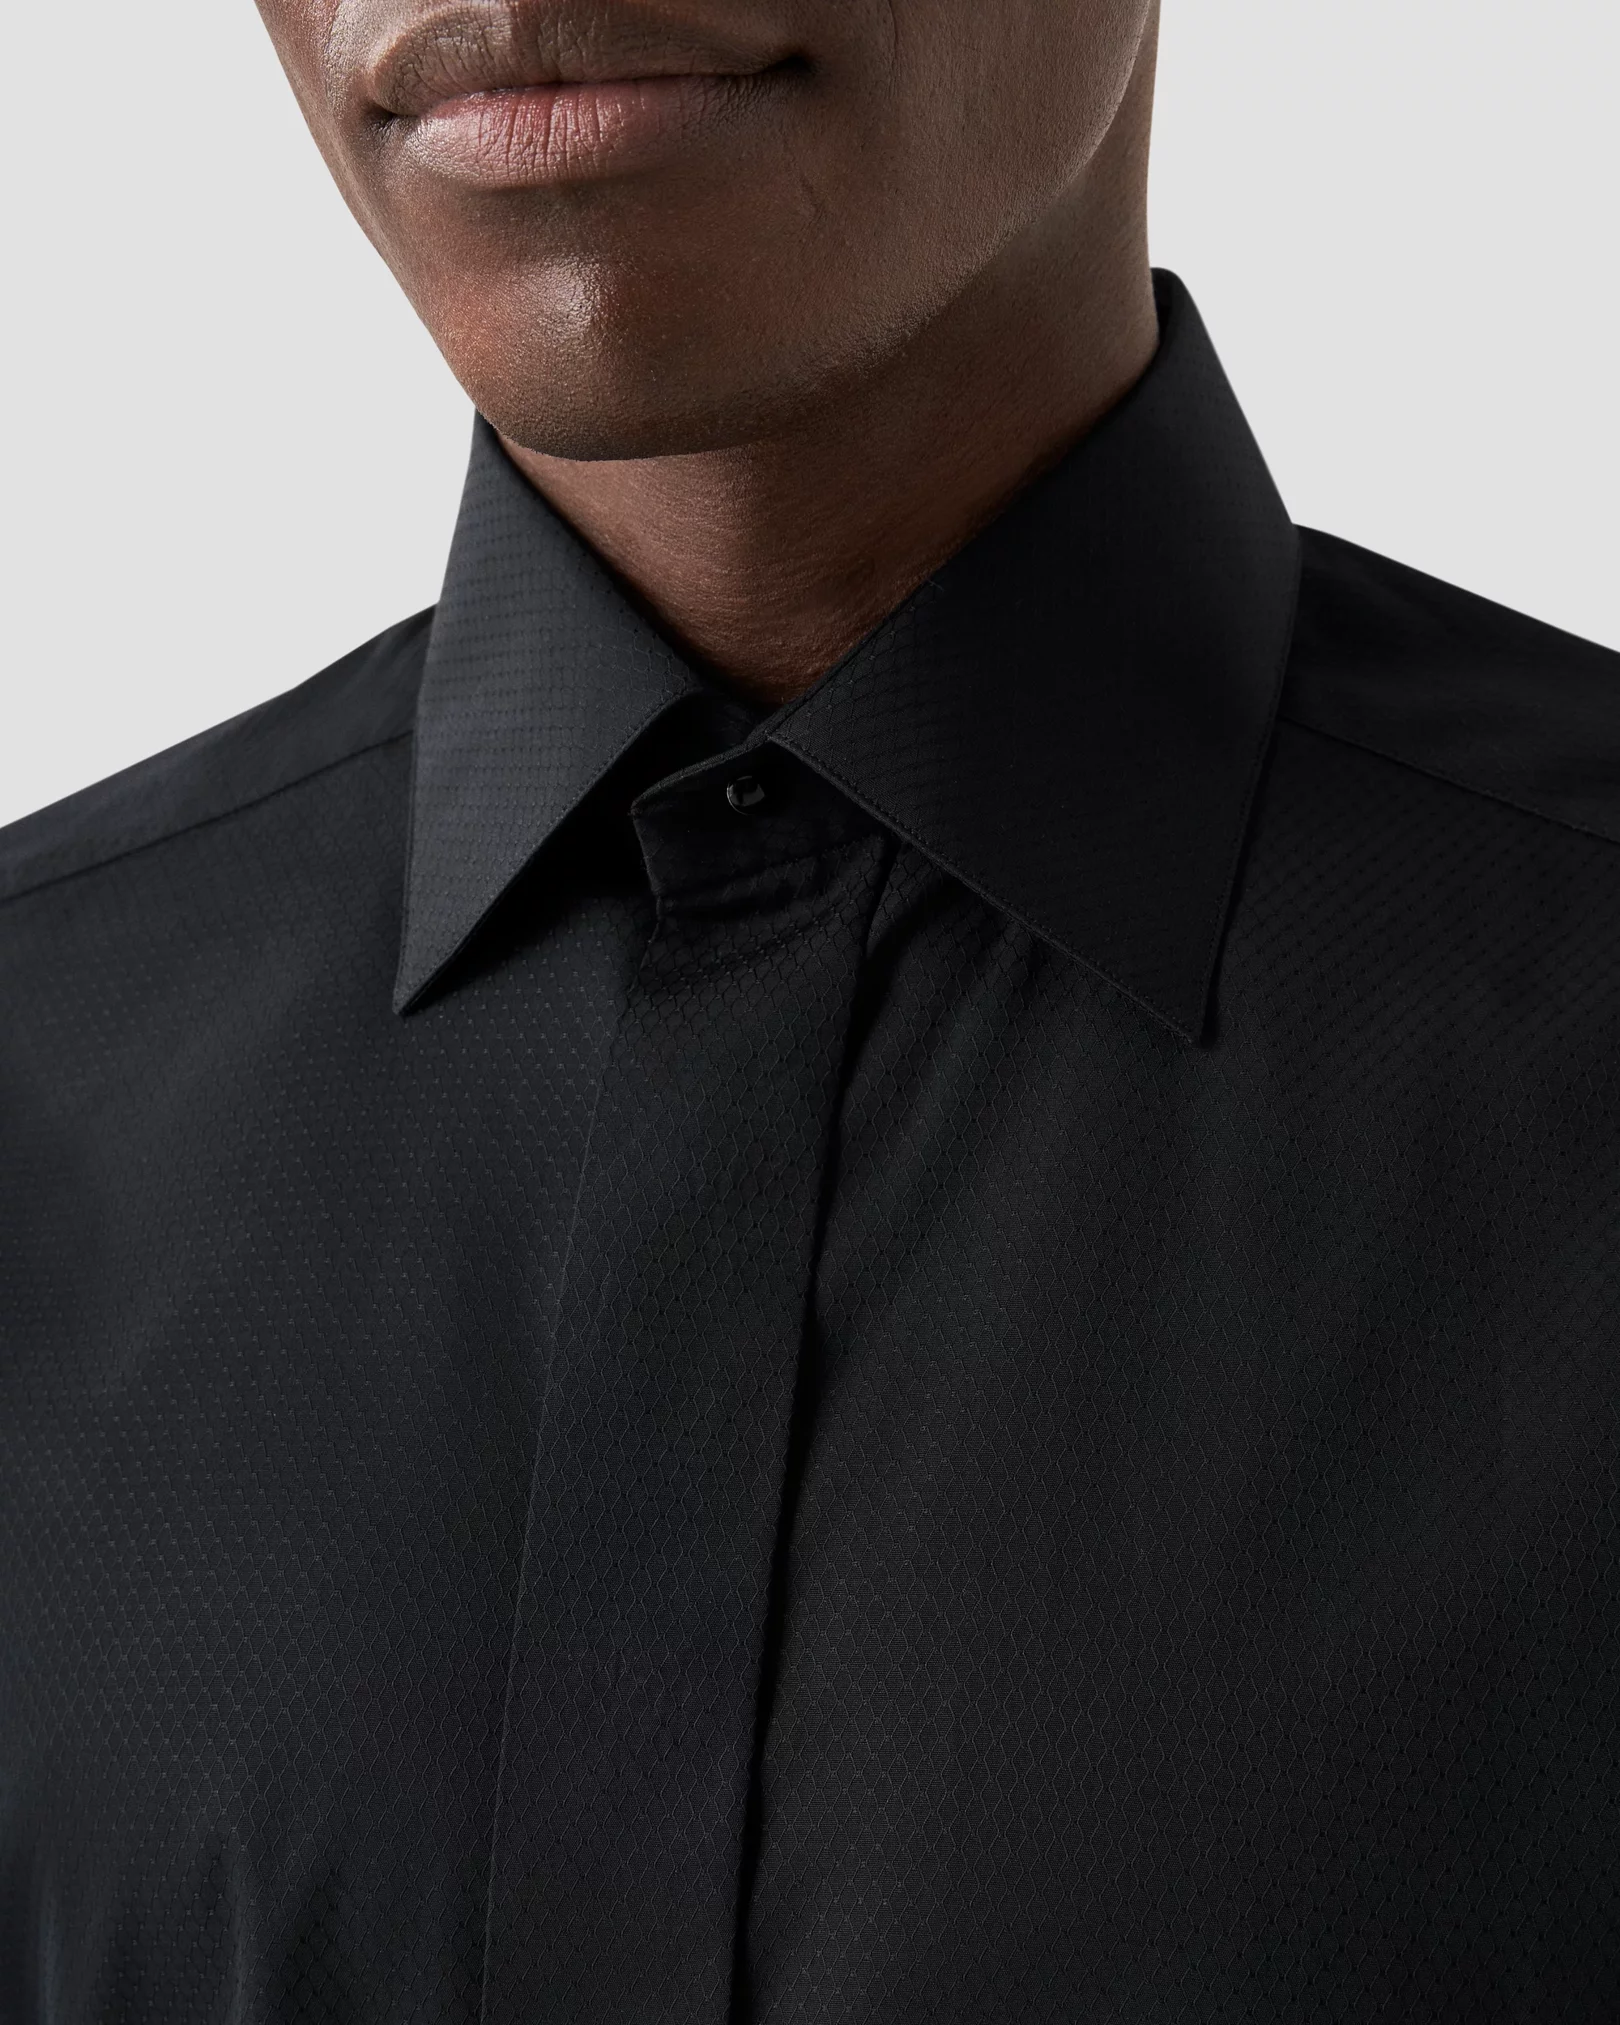 Eton - black plain weave moderate cutaway